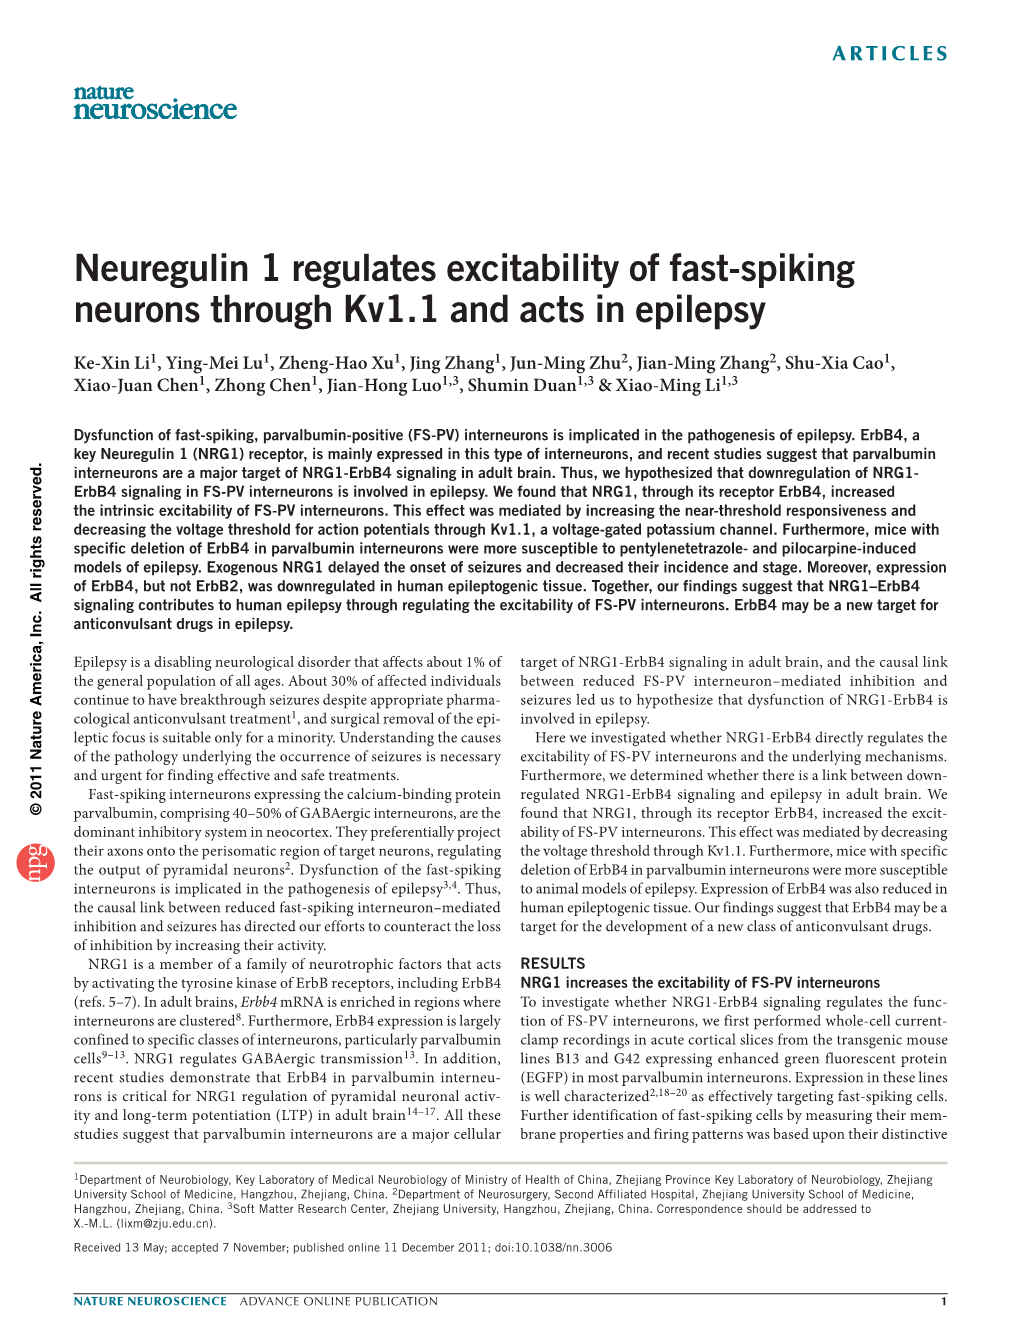 Neuregulin 1 Regulates Excitability of Fast-Spiking Neurons Through Kv1.1